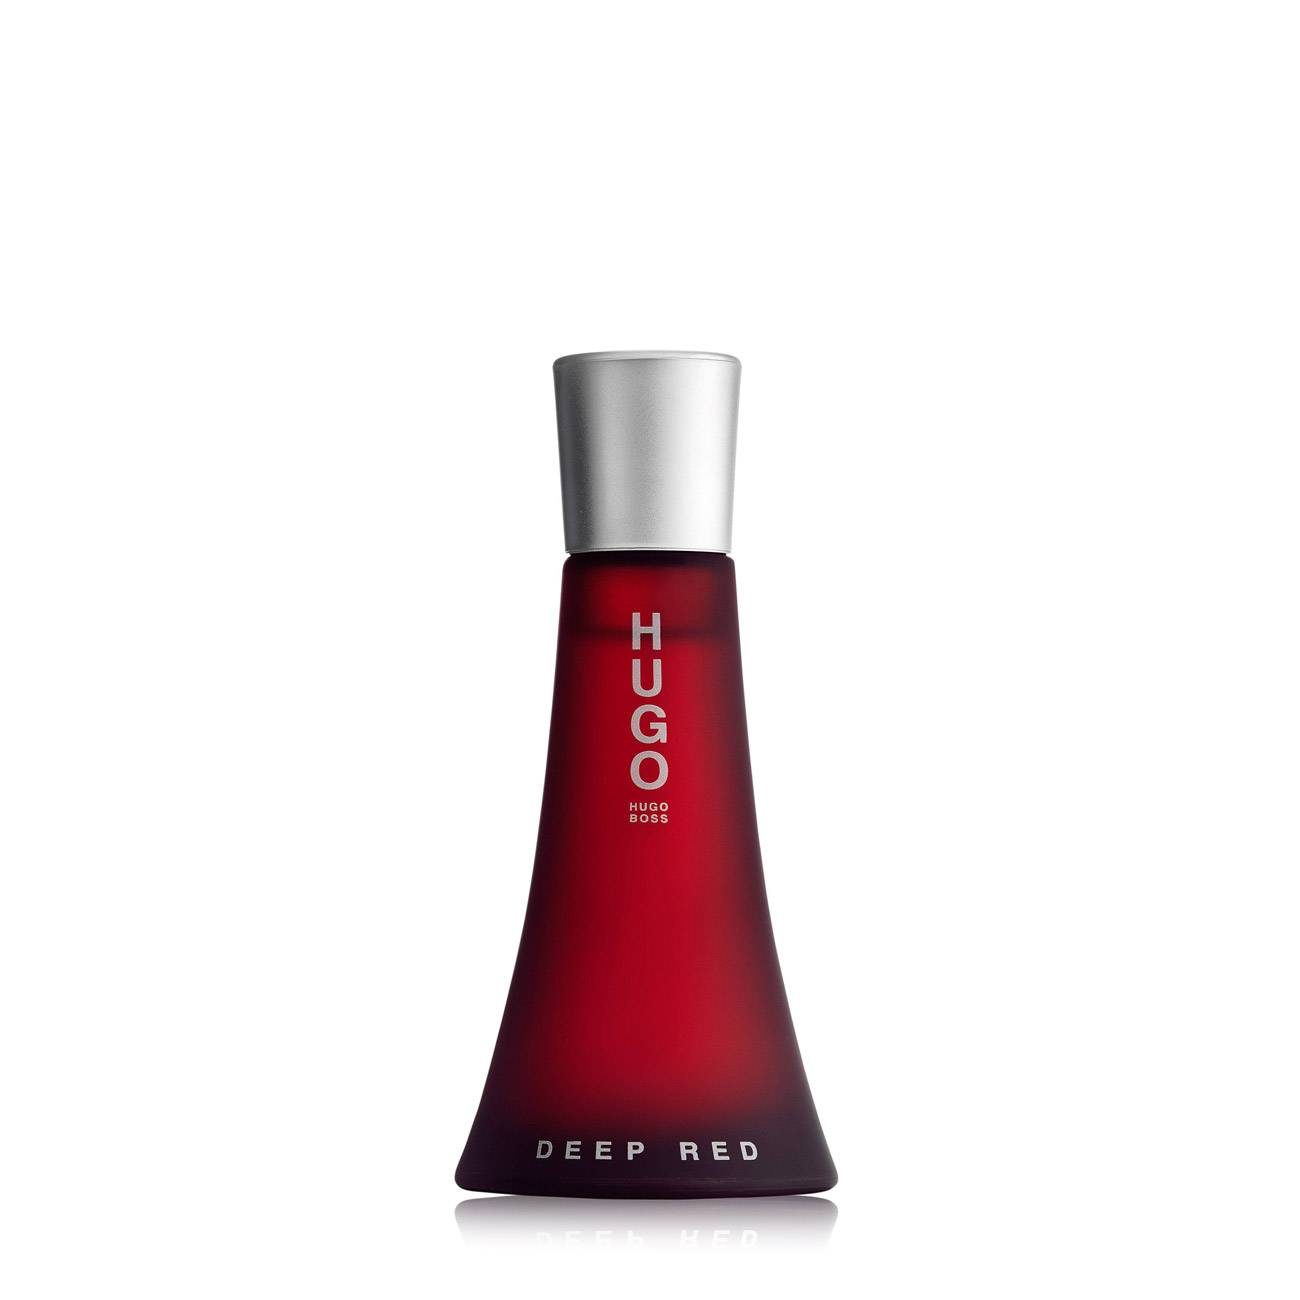 Apa de Parfum Hugo Boss DEEP RED 50ml cu comanda online